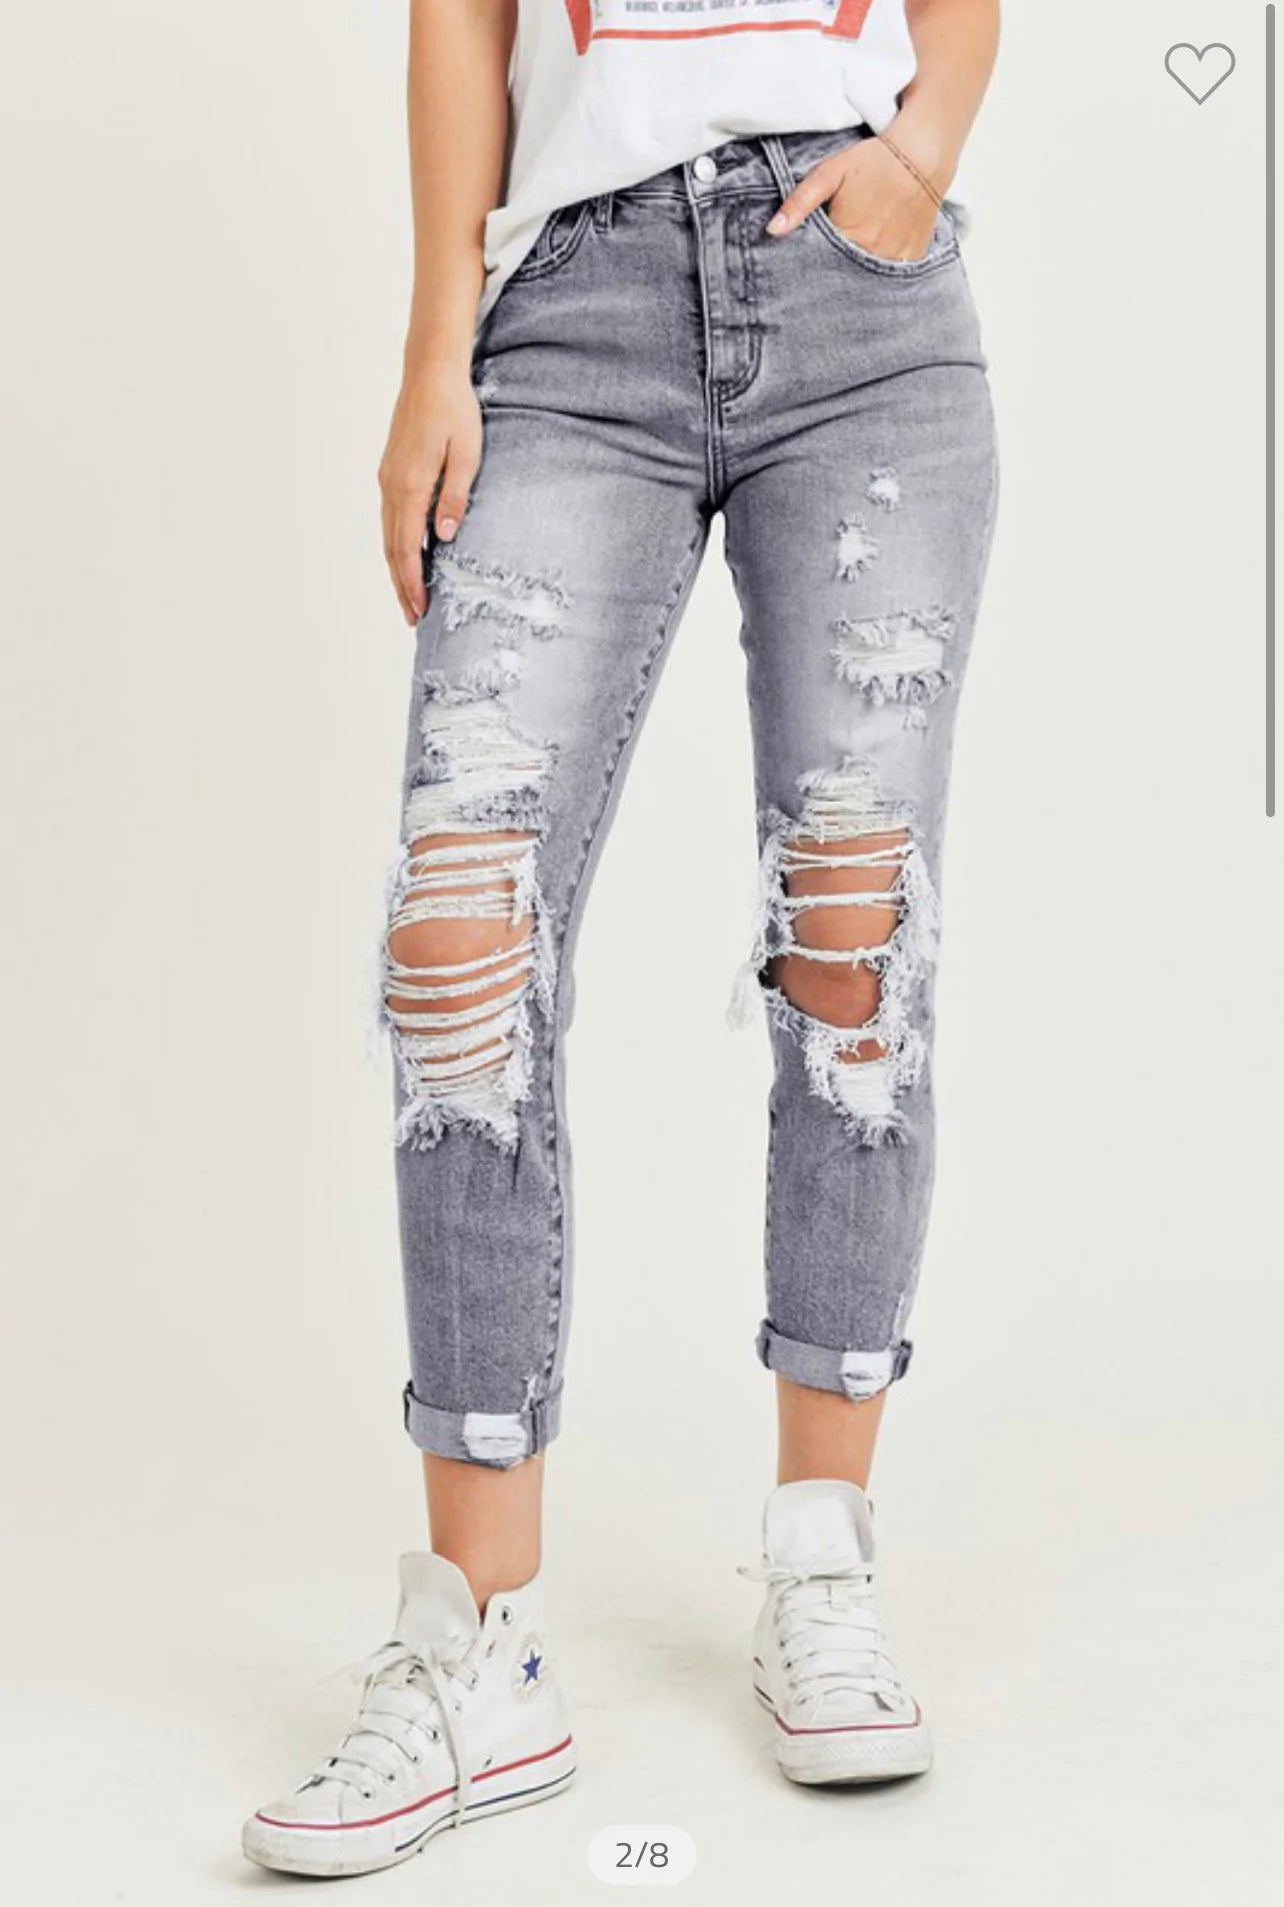 Women's Grey Jeans, Skinny + Distressed Grey Jeans